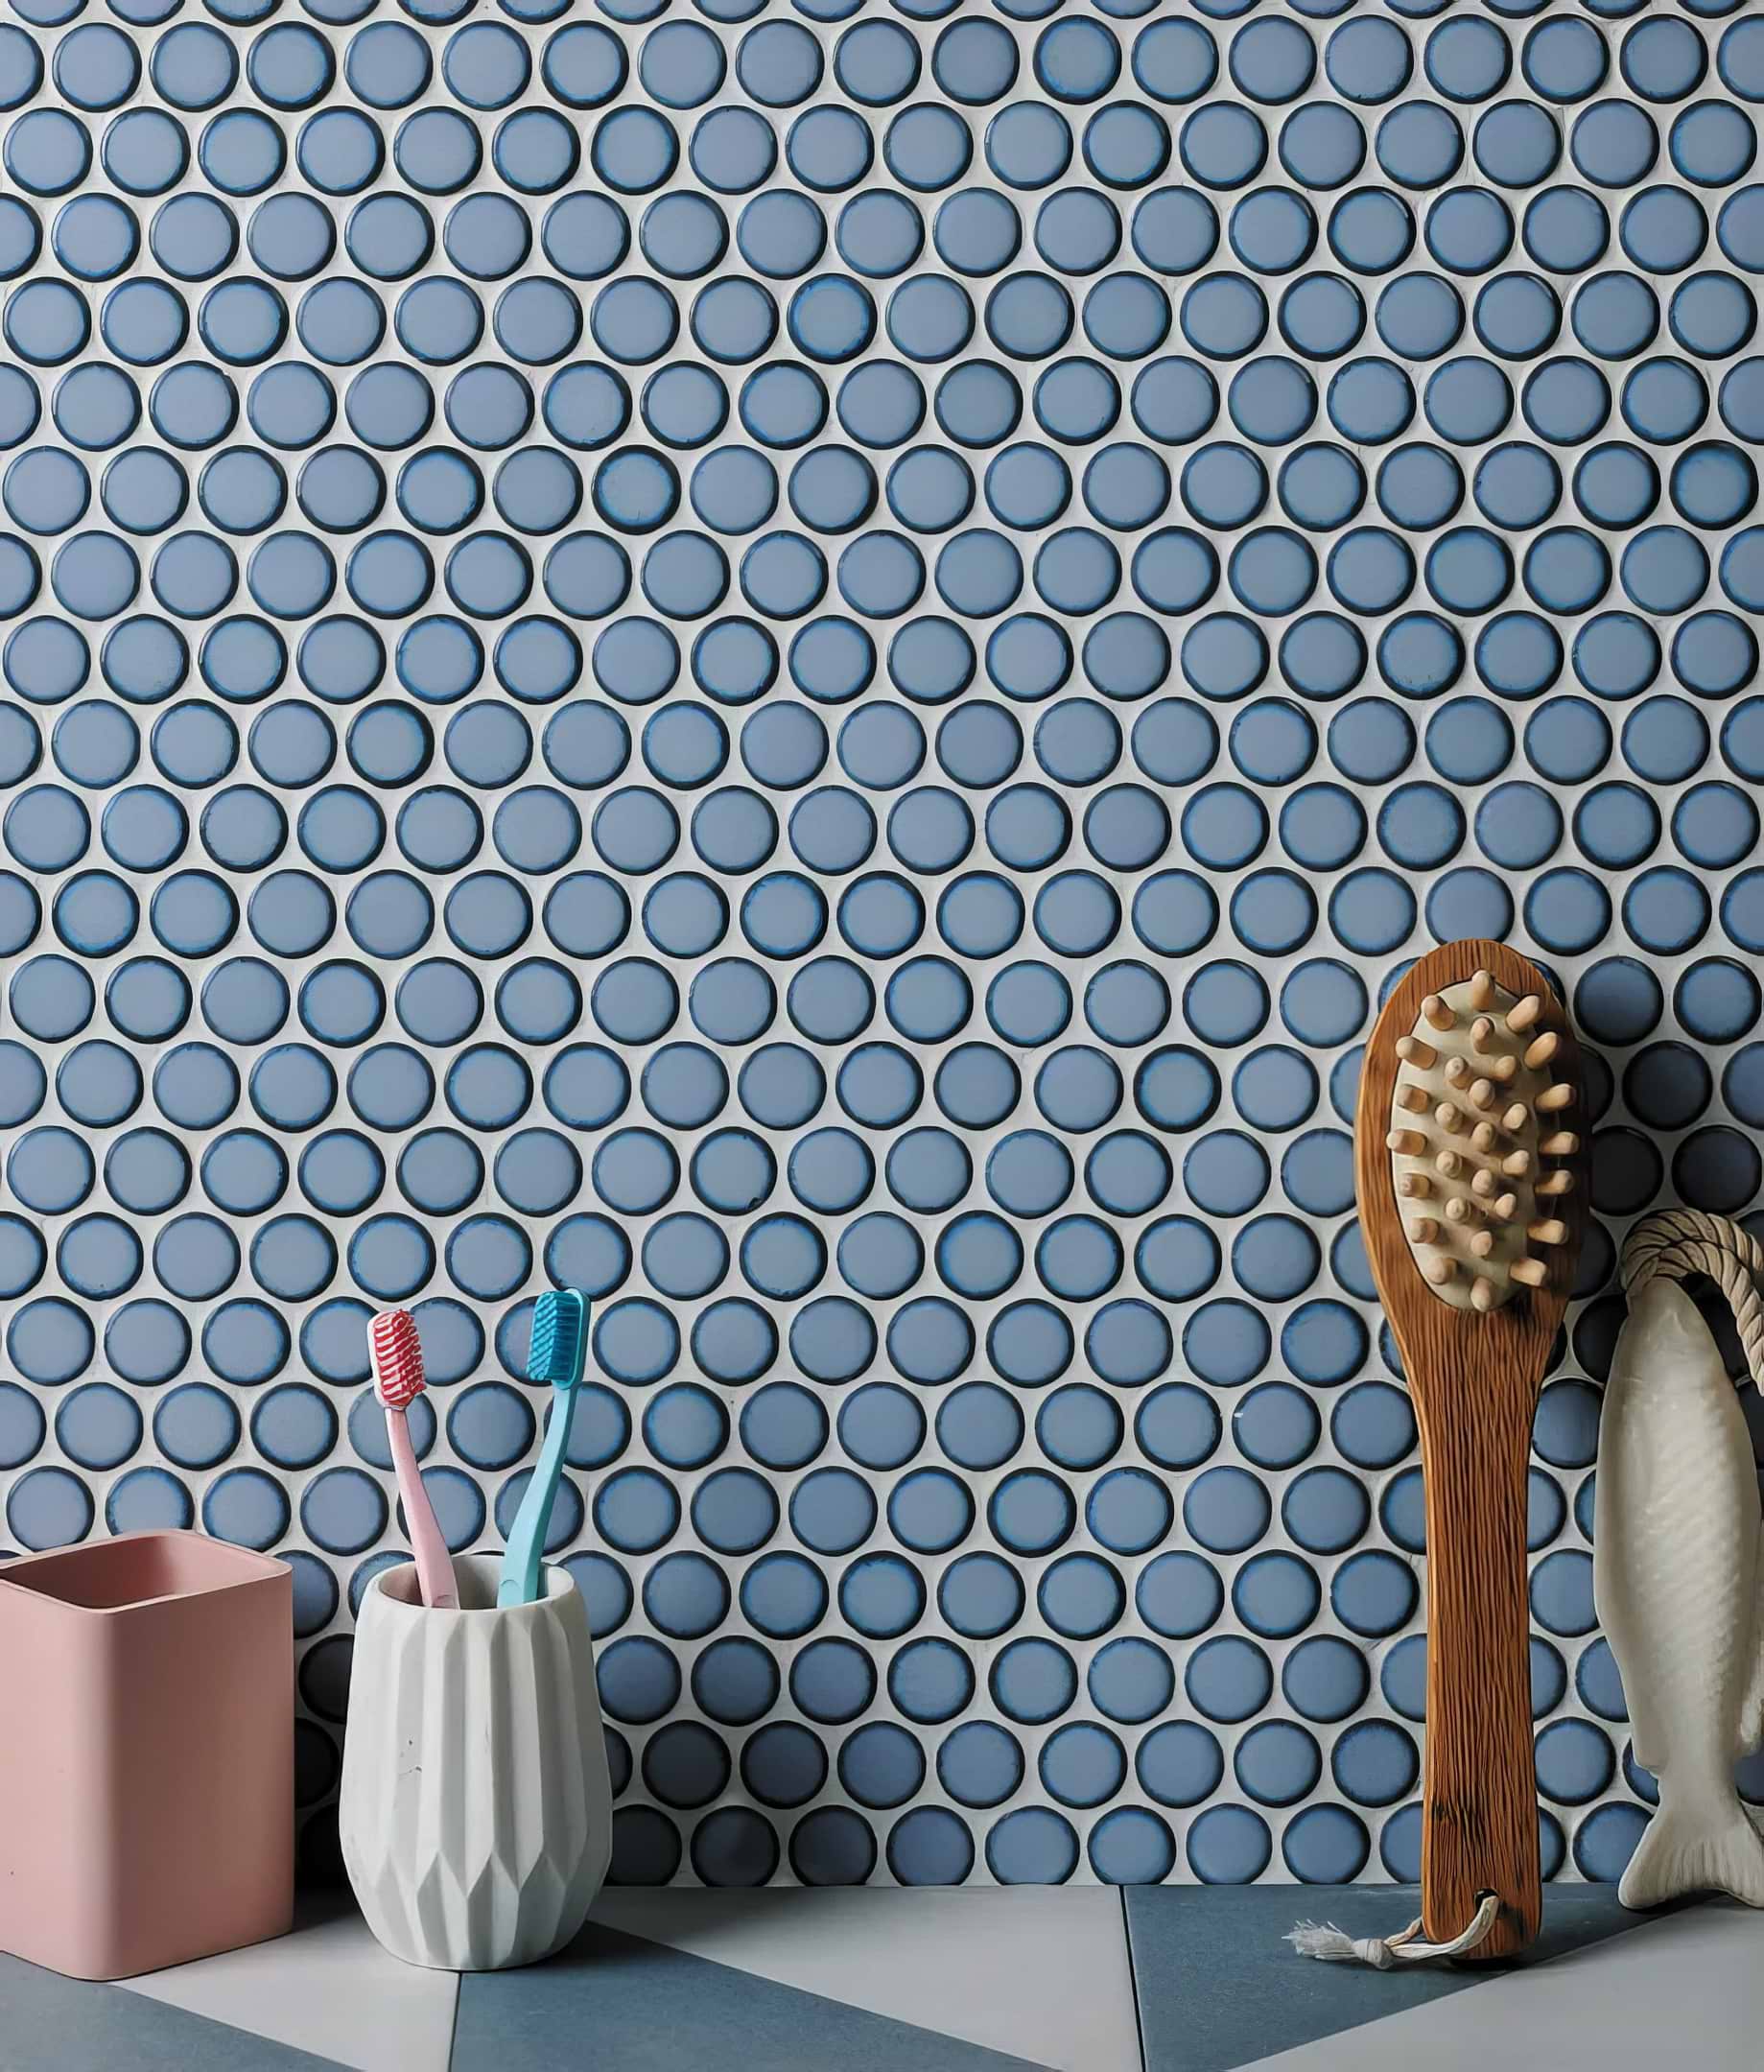 Yoga Penny Porcelain Mosaic Grey Blue - Hyperion Tiles